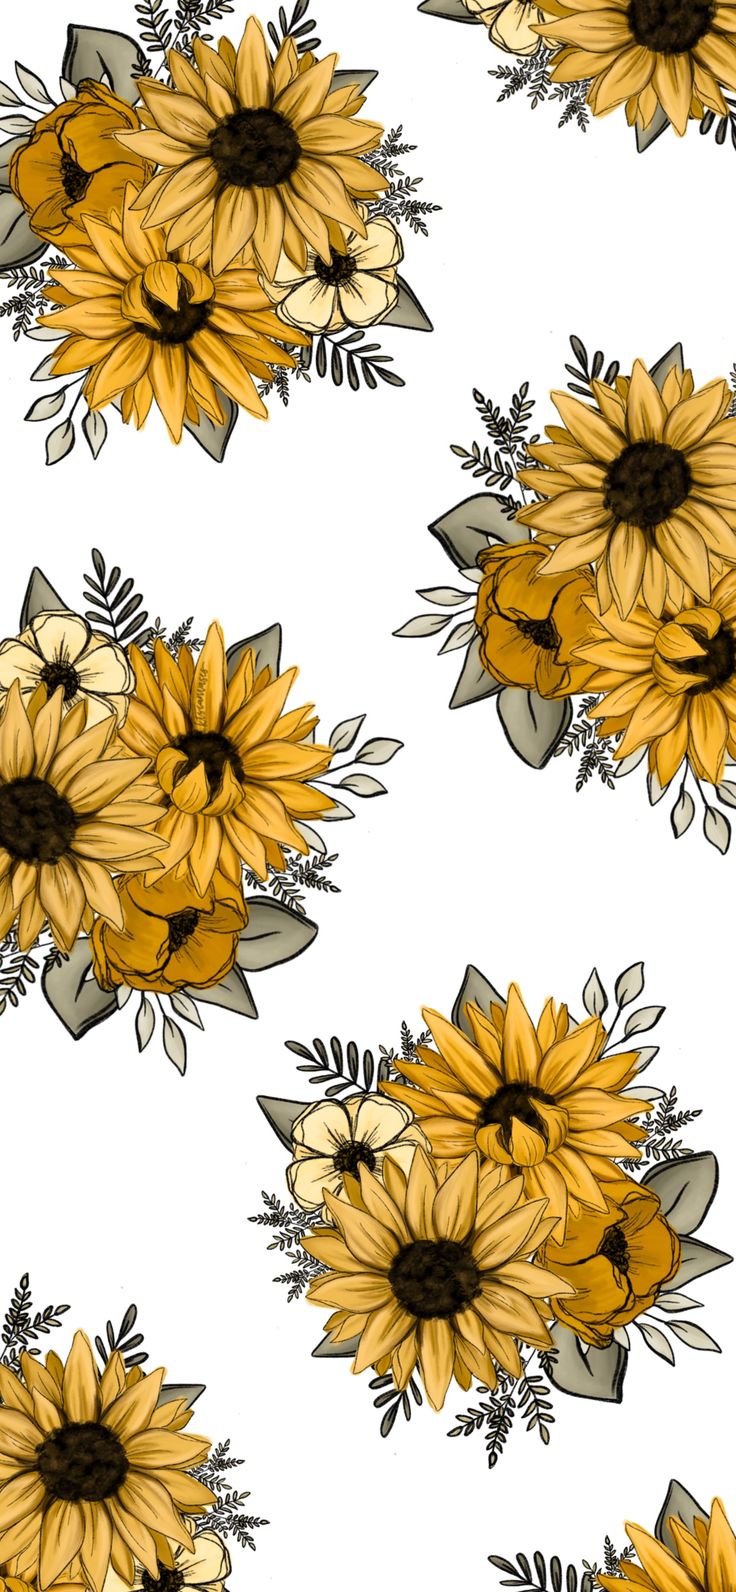 Wallpaper. Sunflower wallpaper, Flower background wallpaper, Sunflower iphone wallpaper